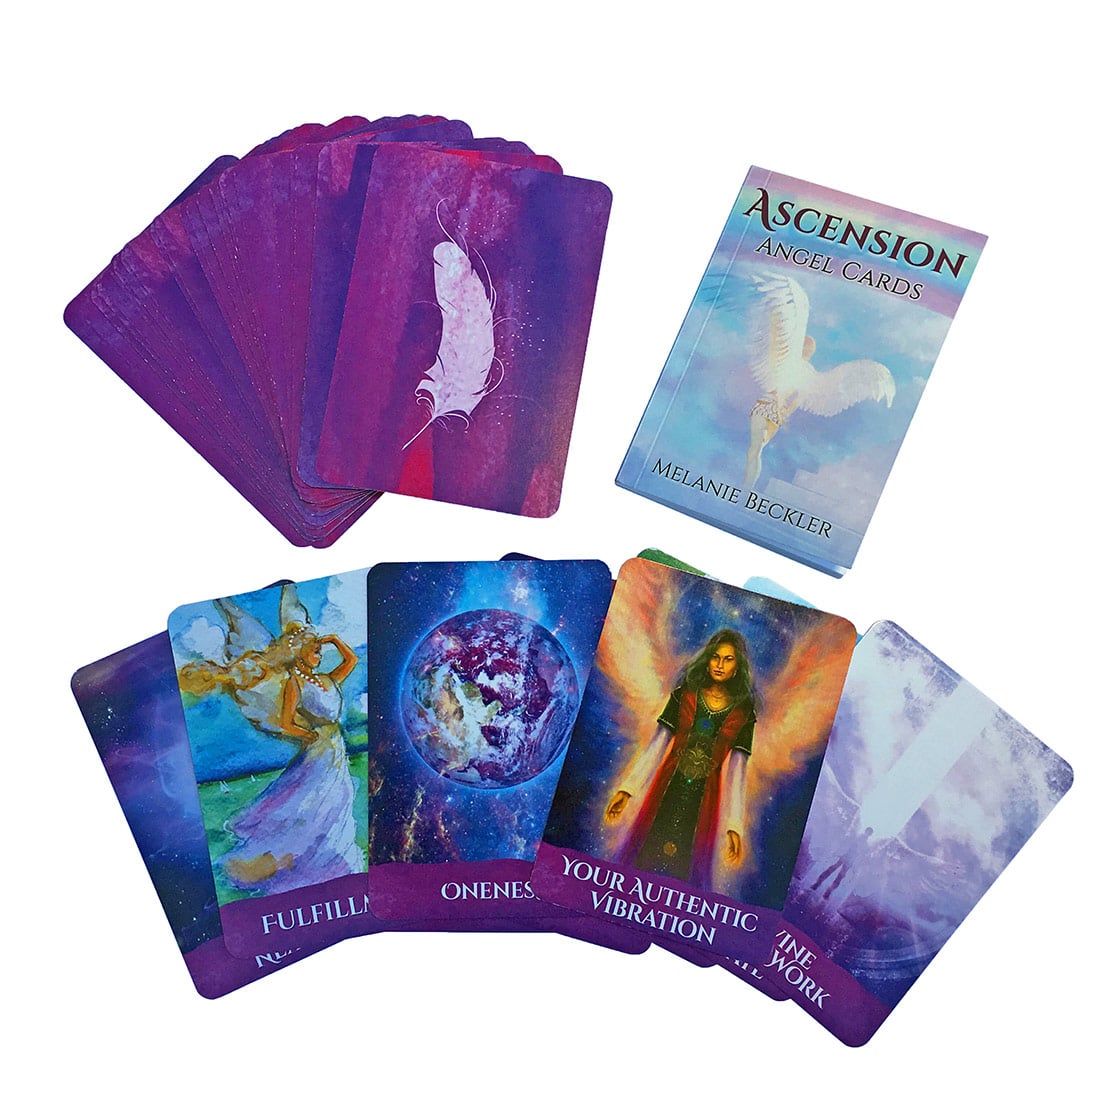 Ascension Angel Cards